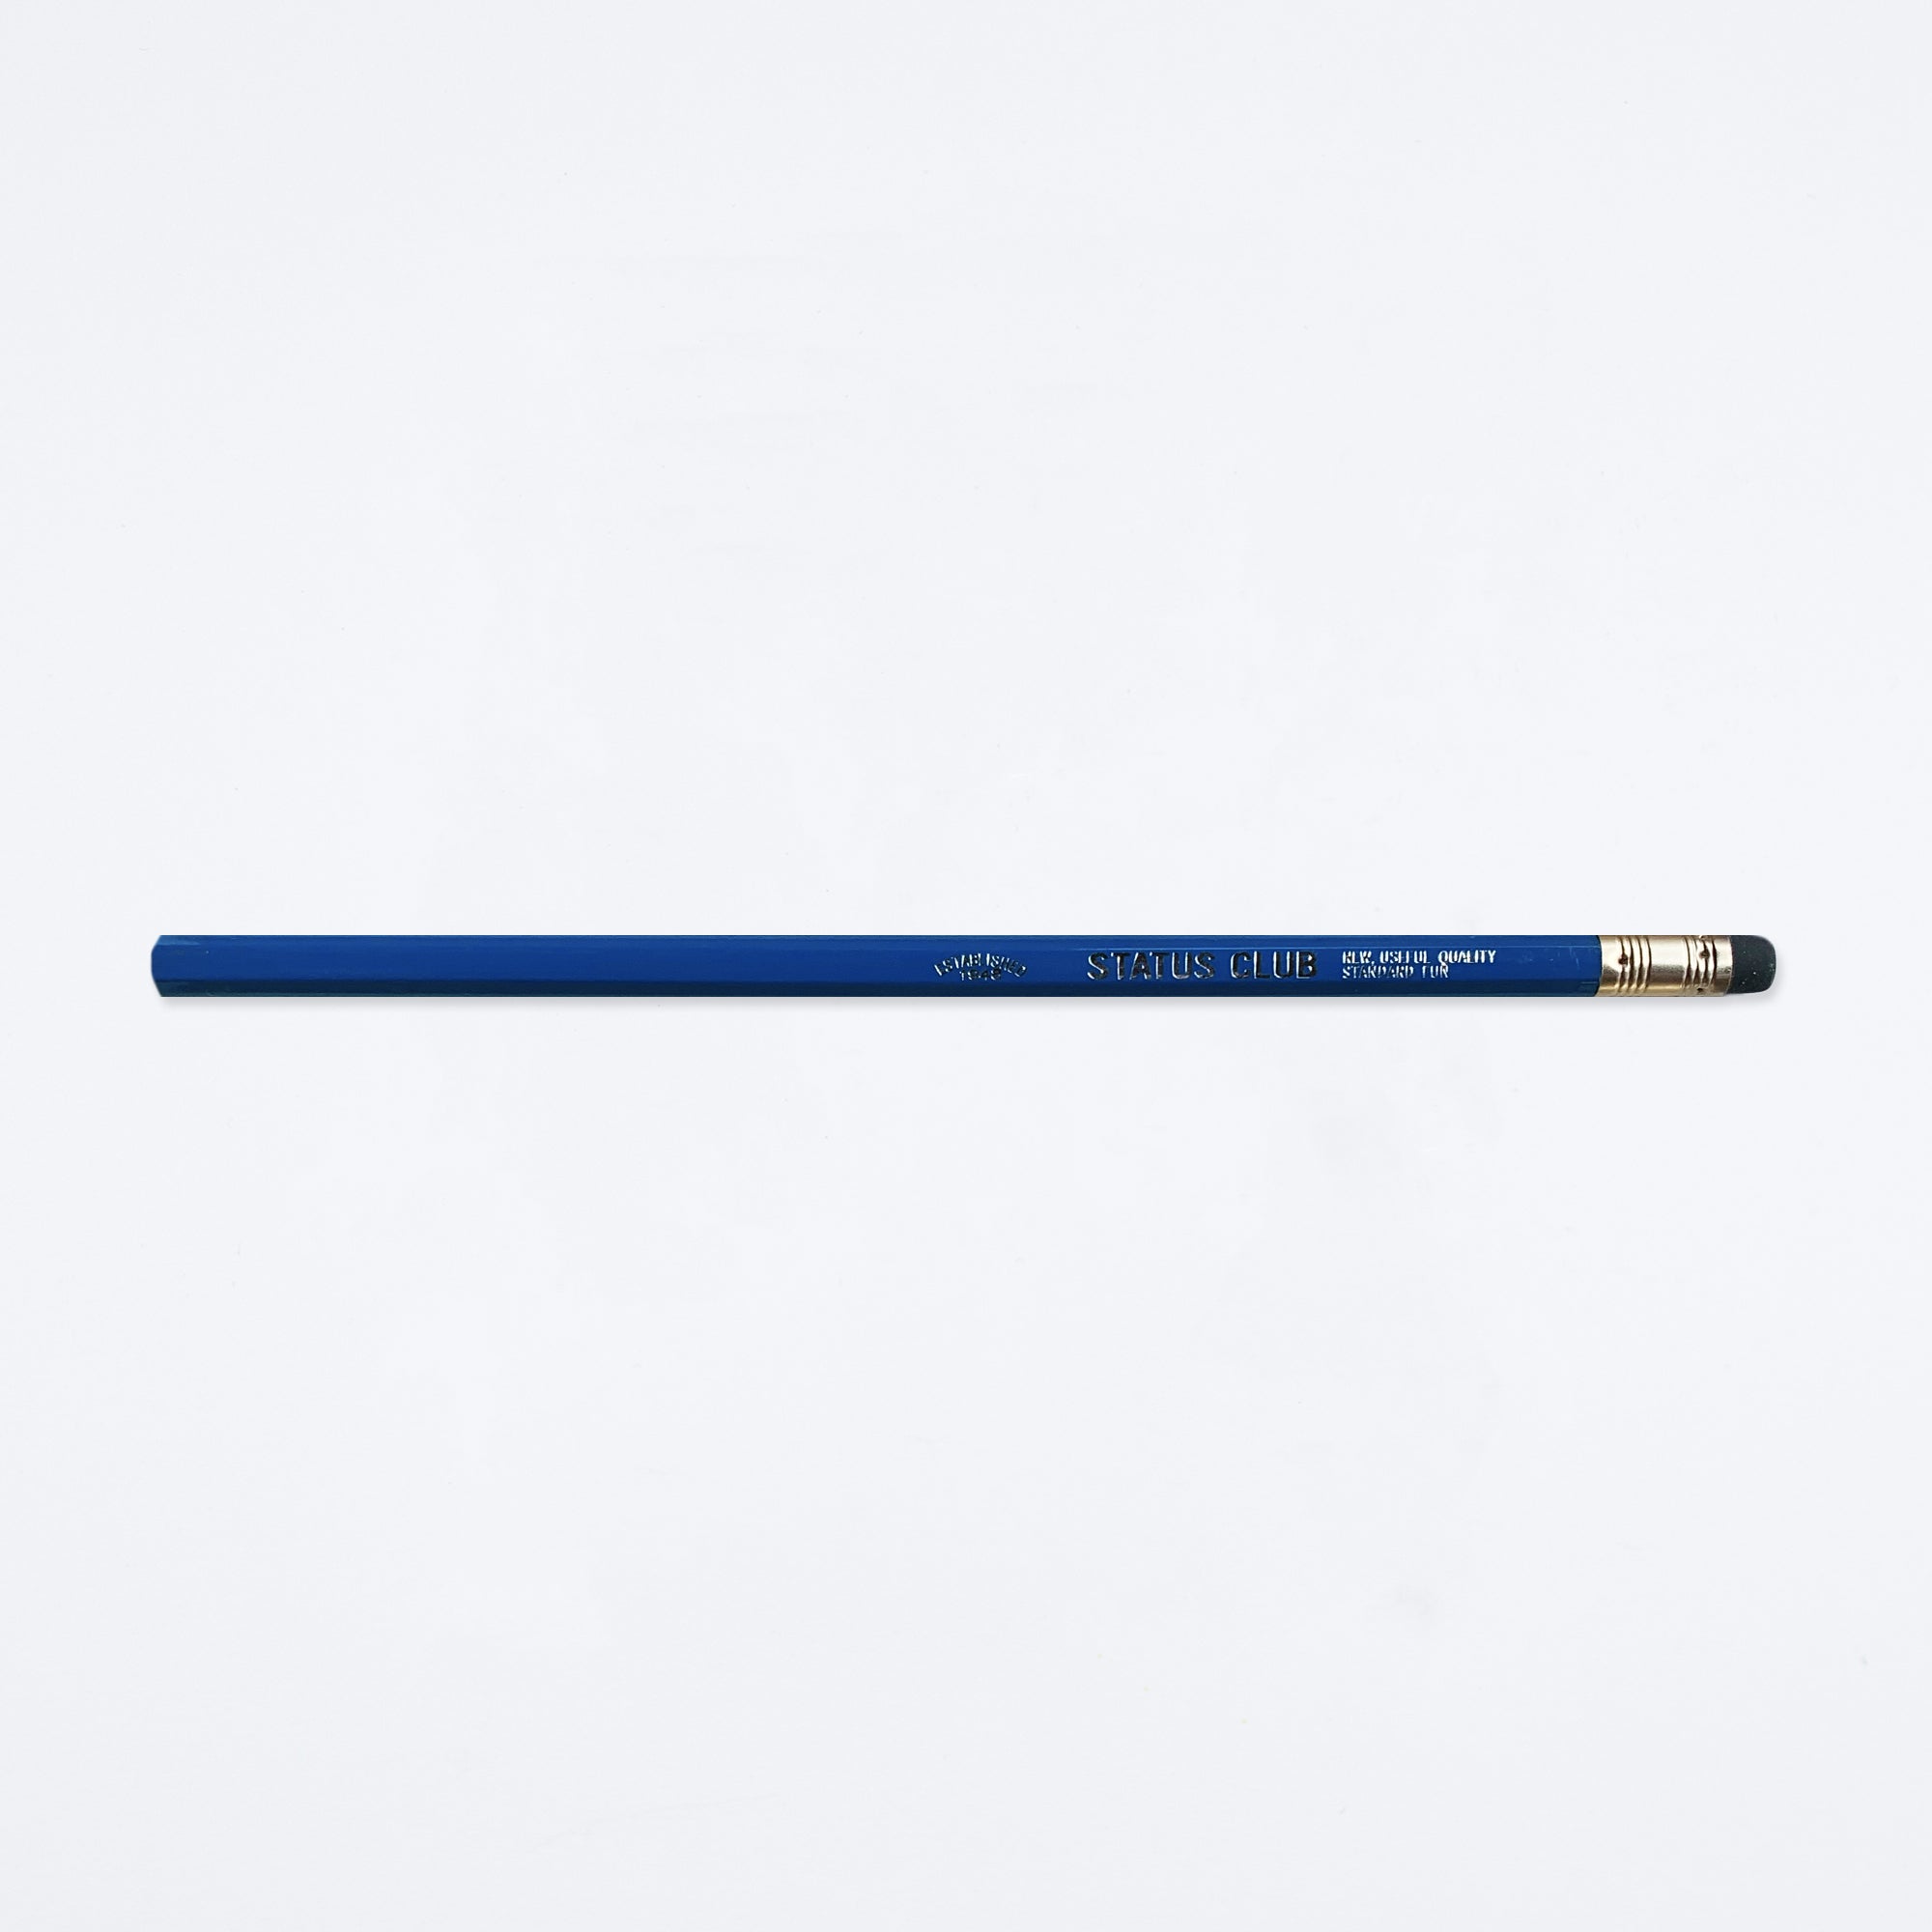 Status Club Pencil